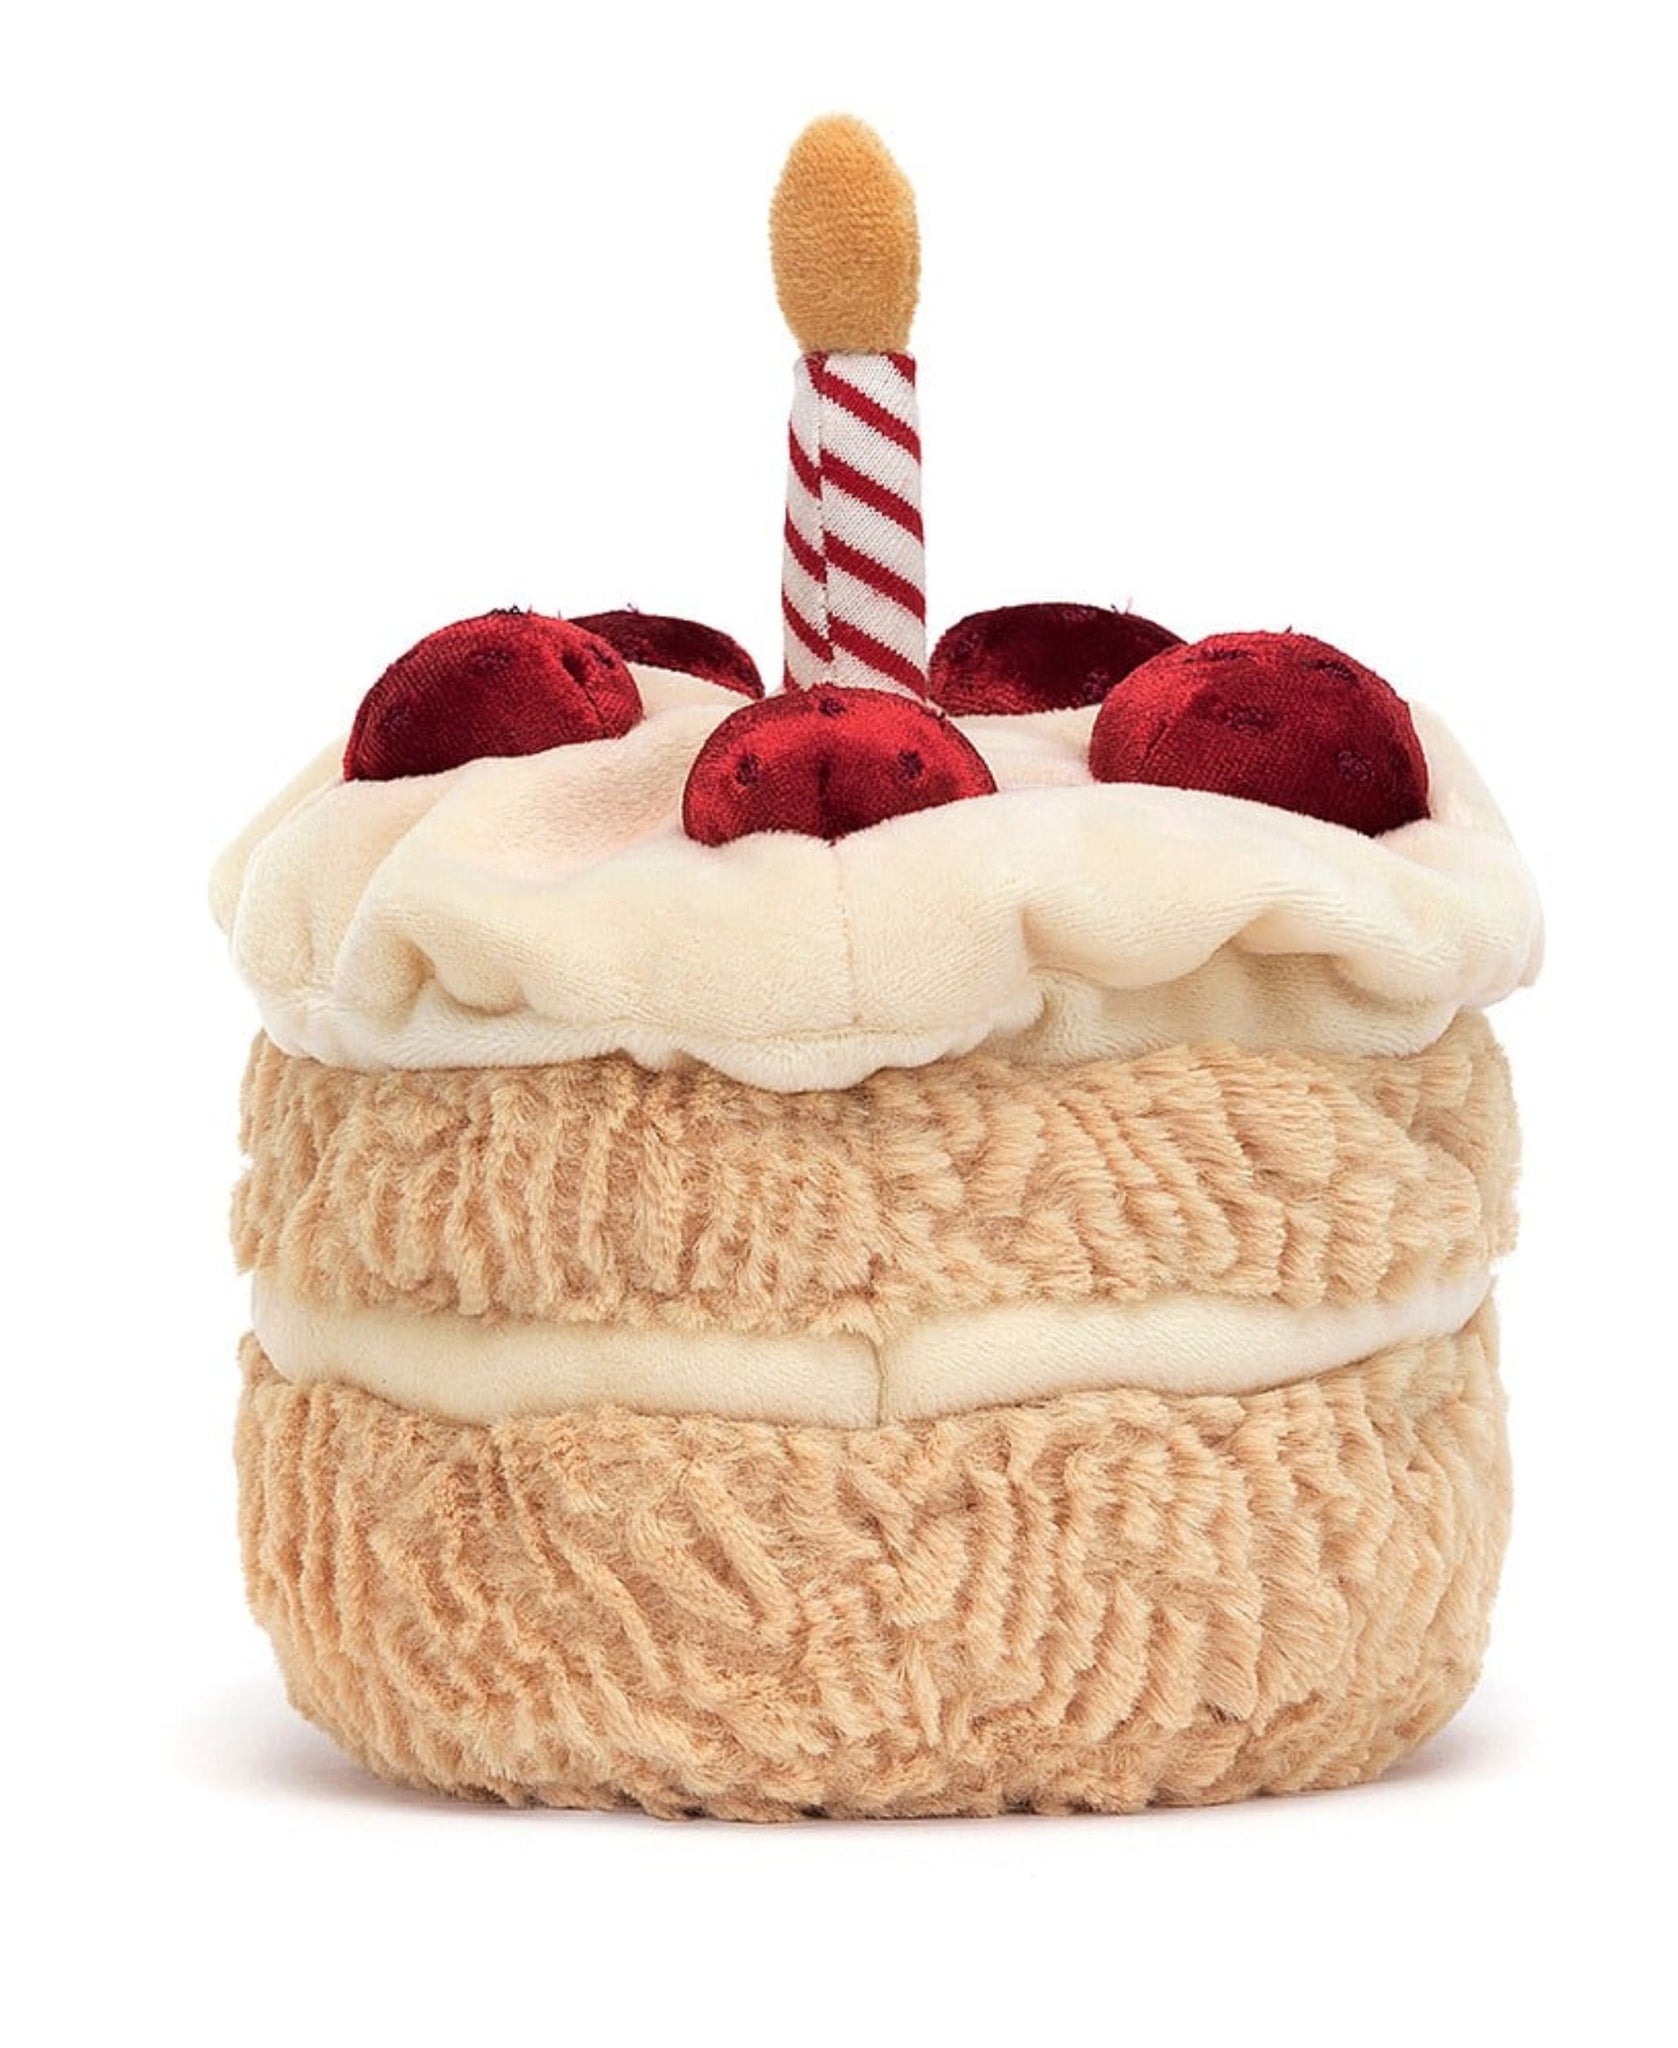 JellyCat Amuseable Birthday Cake